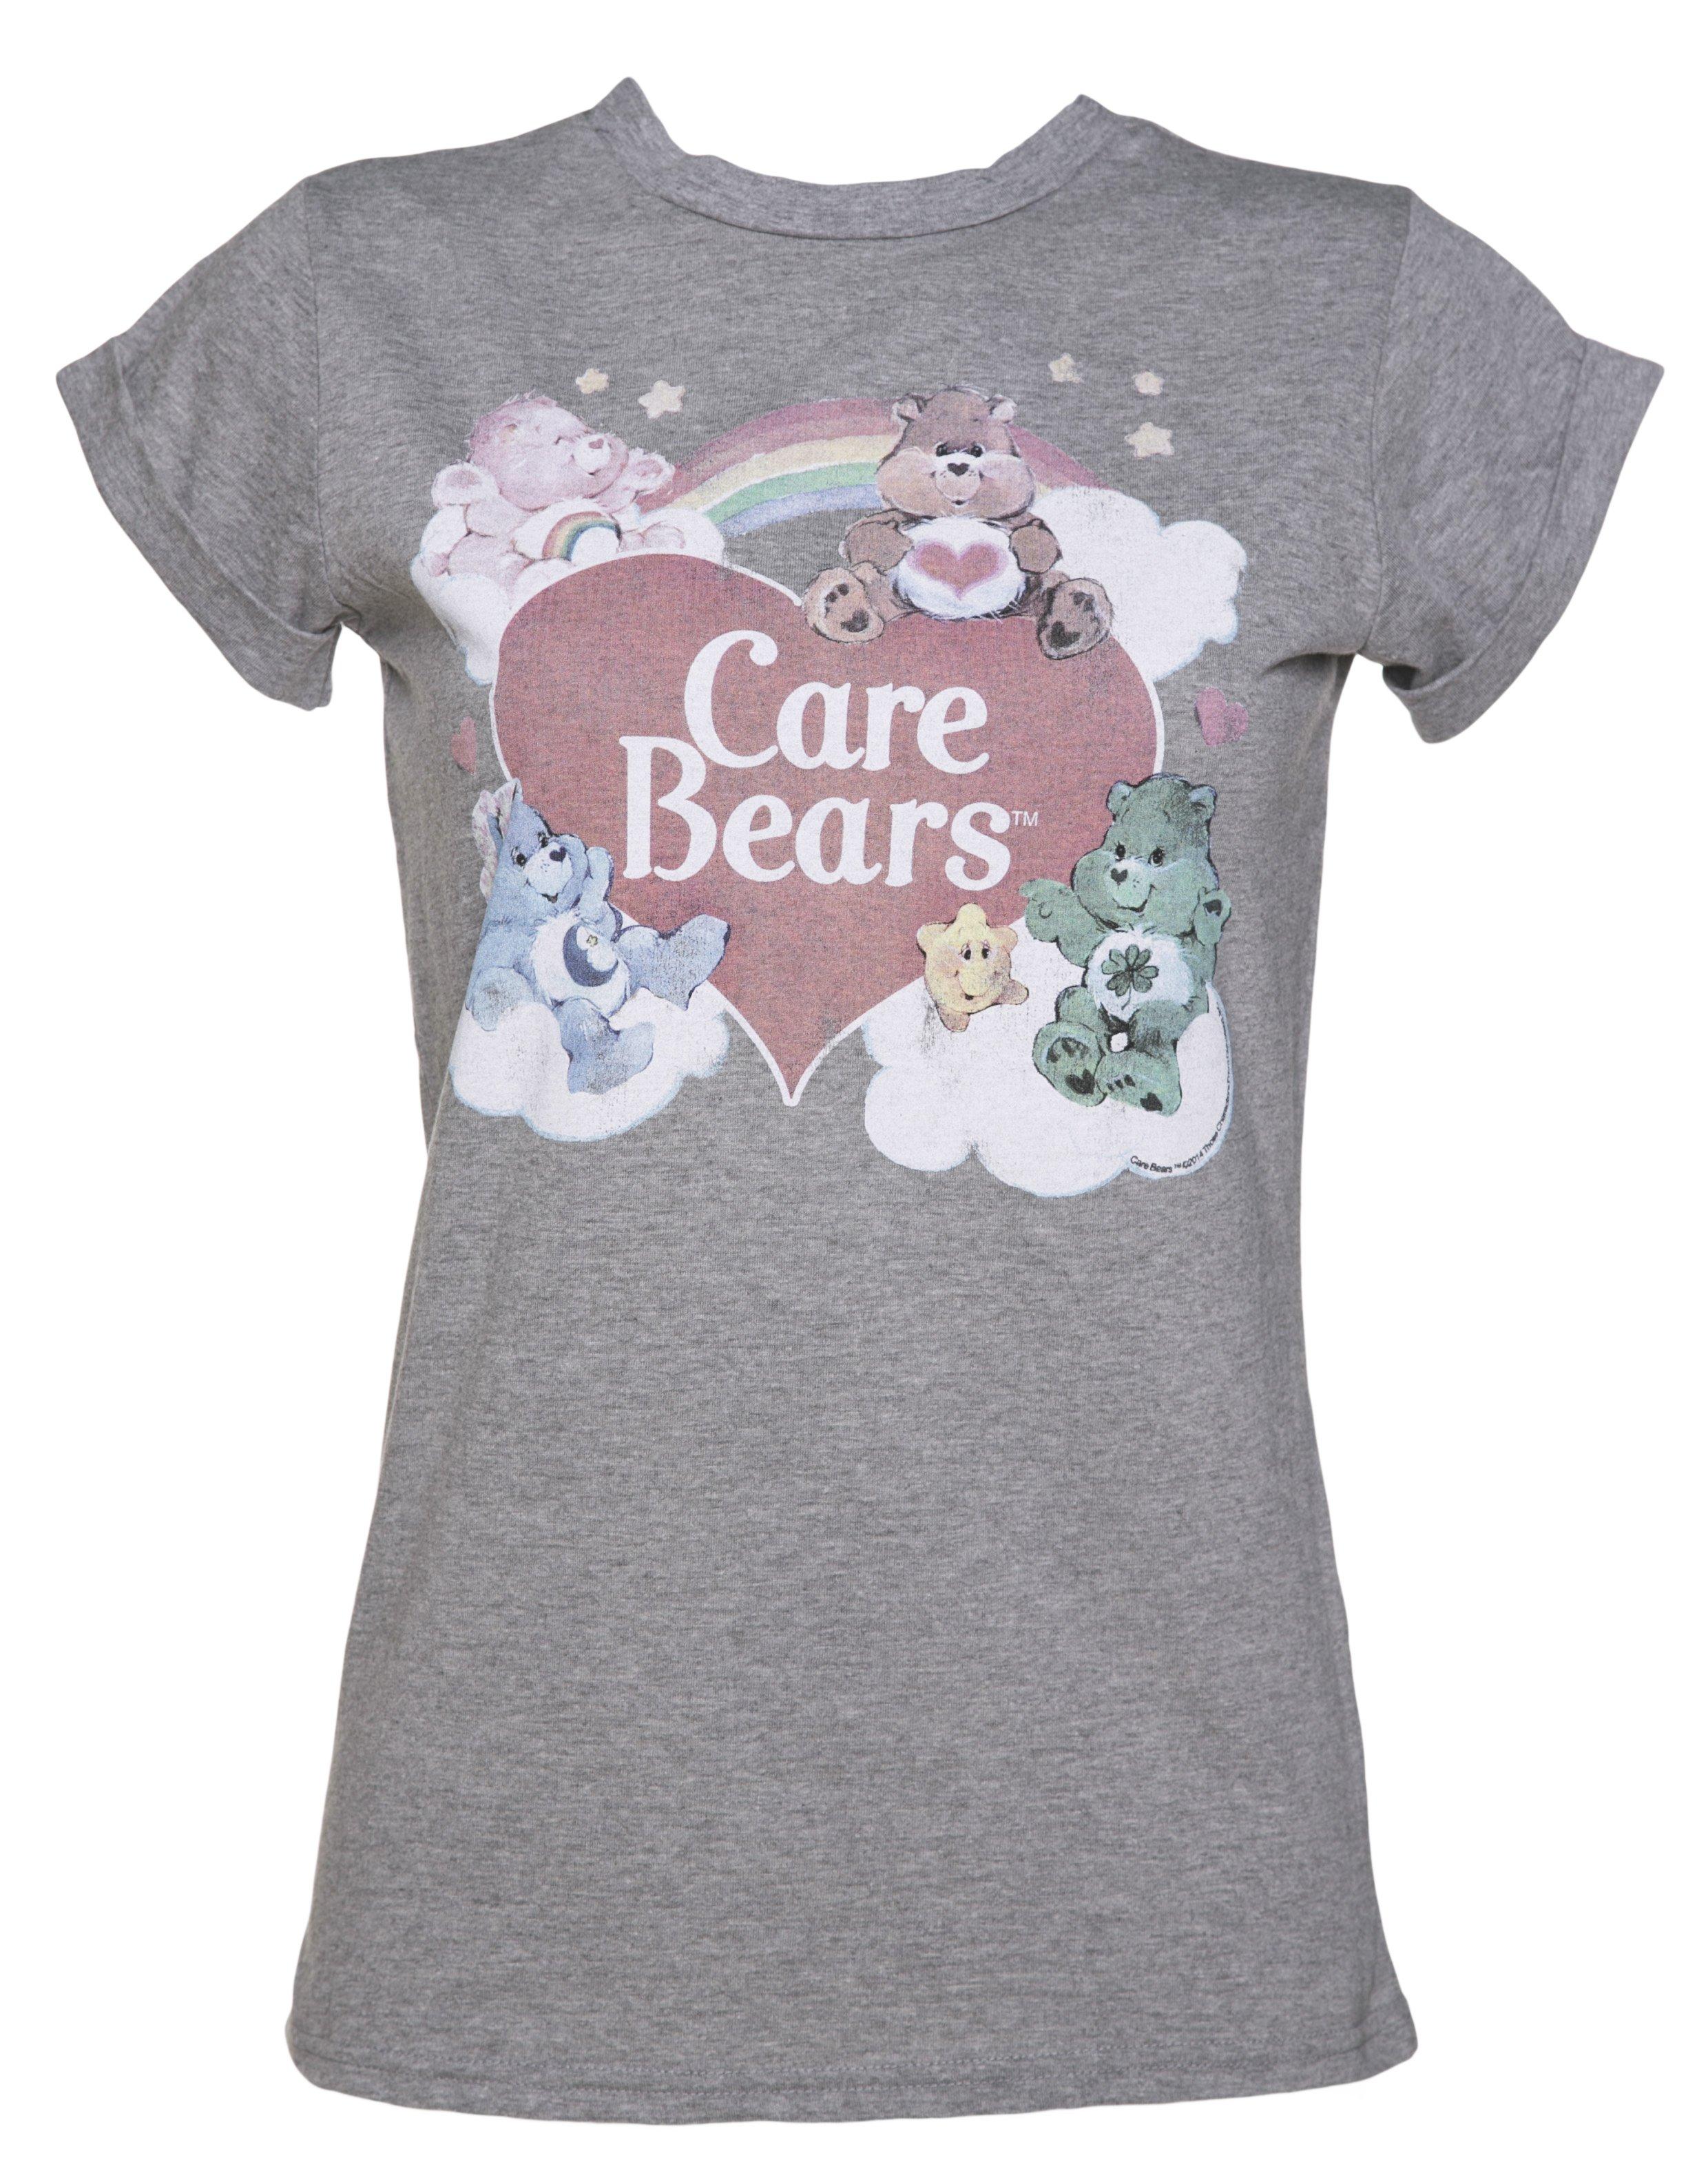 Adult care bear shirts